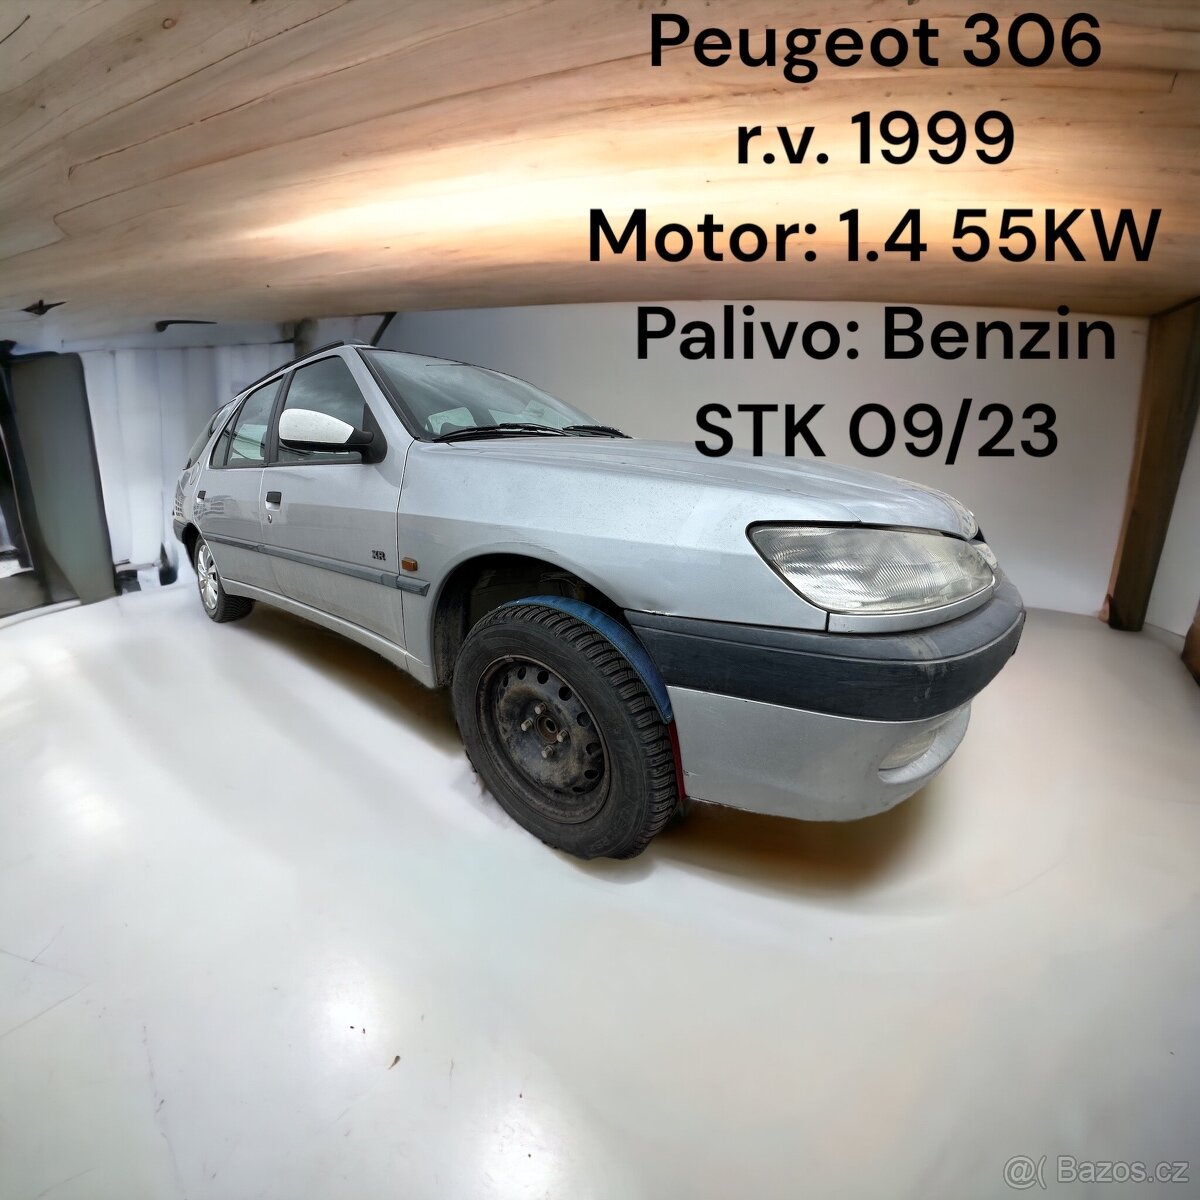 Peugeot 306 1.4 55KW benzin STK do 09/23